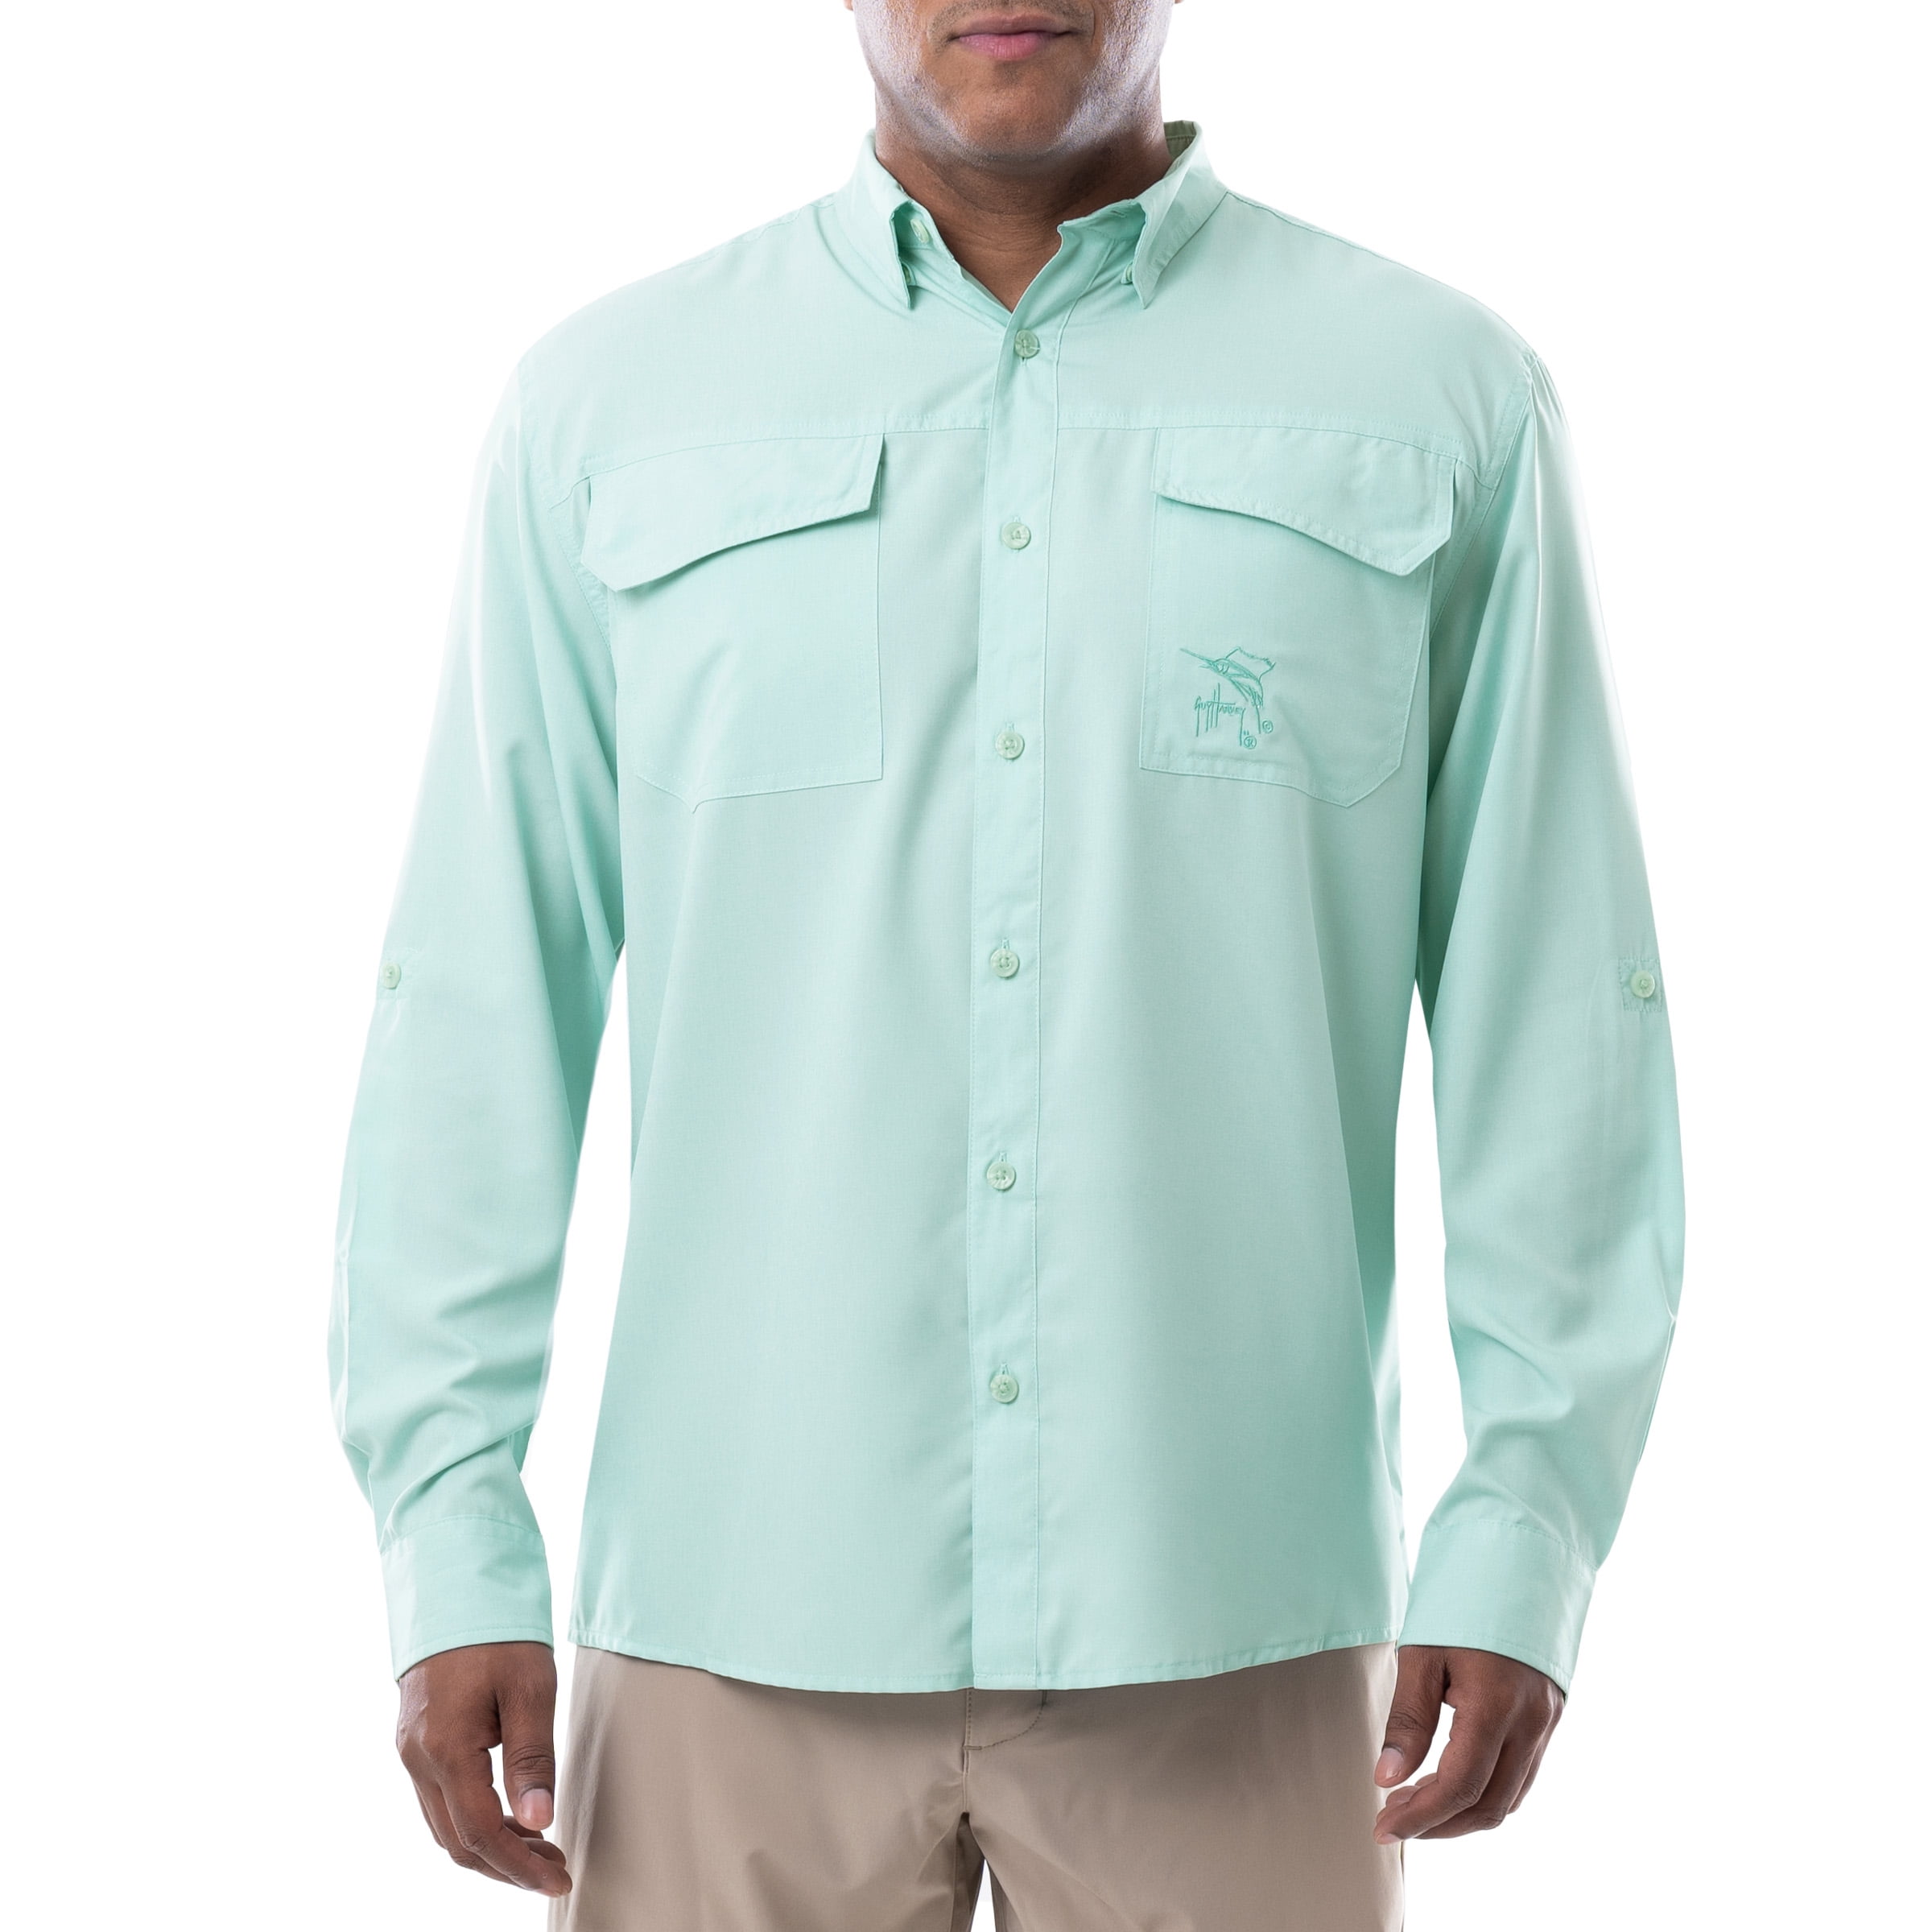 Guy Harvey Men's Long Sleeve Performance Fishing Shirt - Plume 2X Large